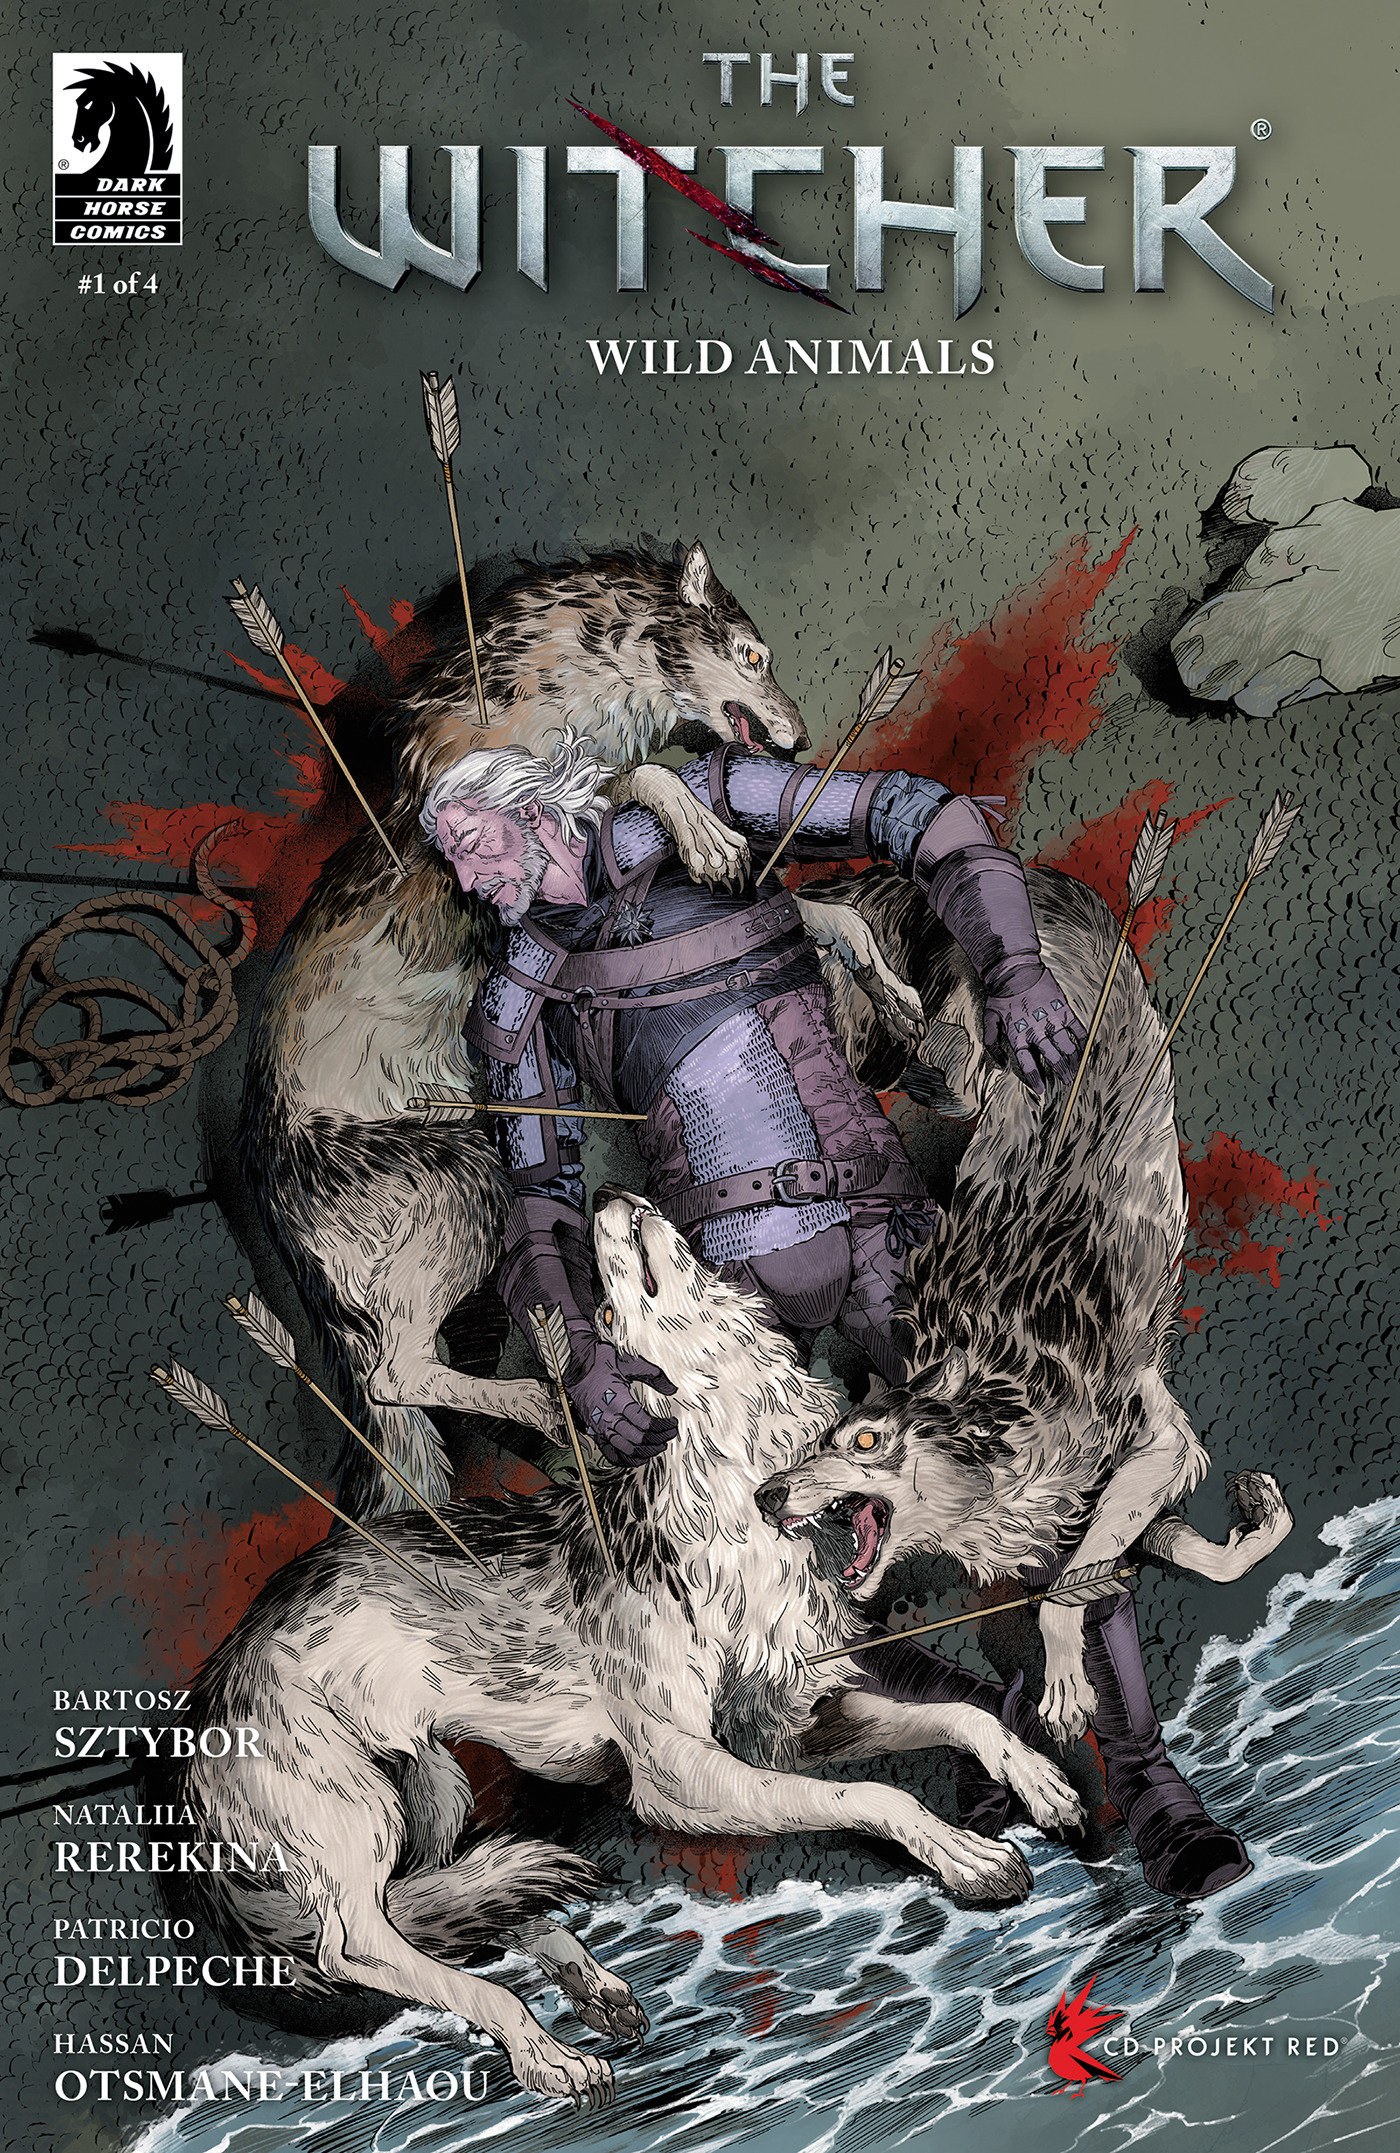 The Witcher: Wild Animals #1 Cover A (Nataliia Rerekina)